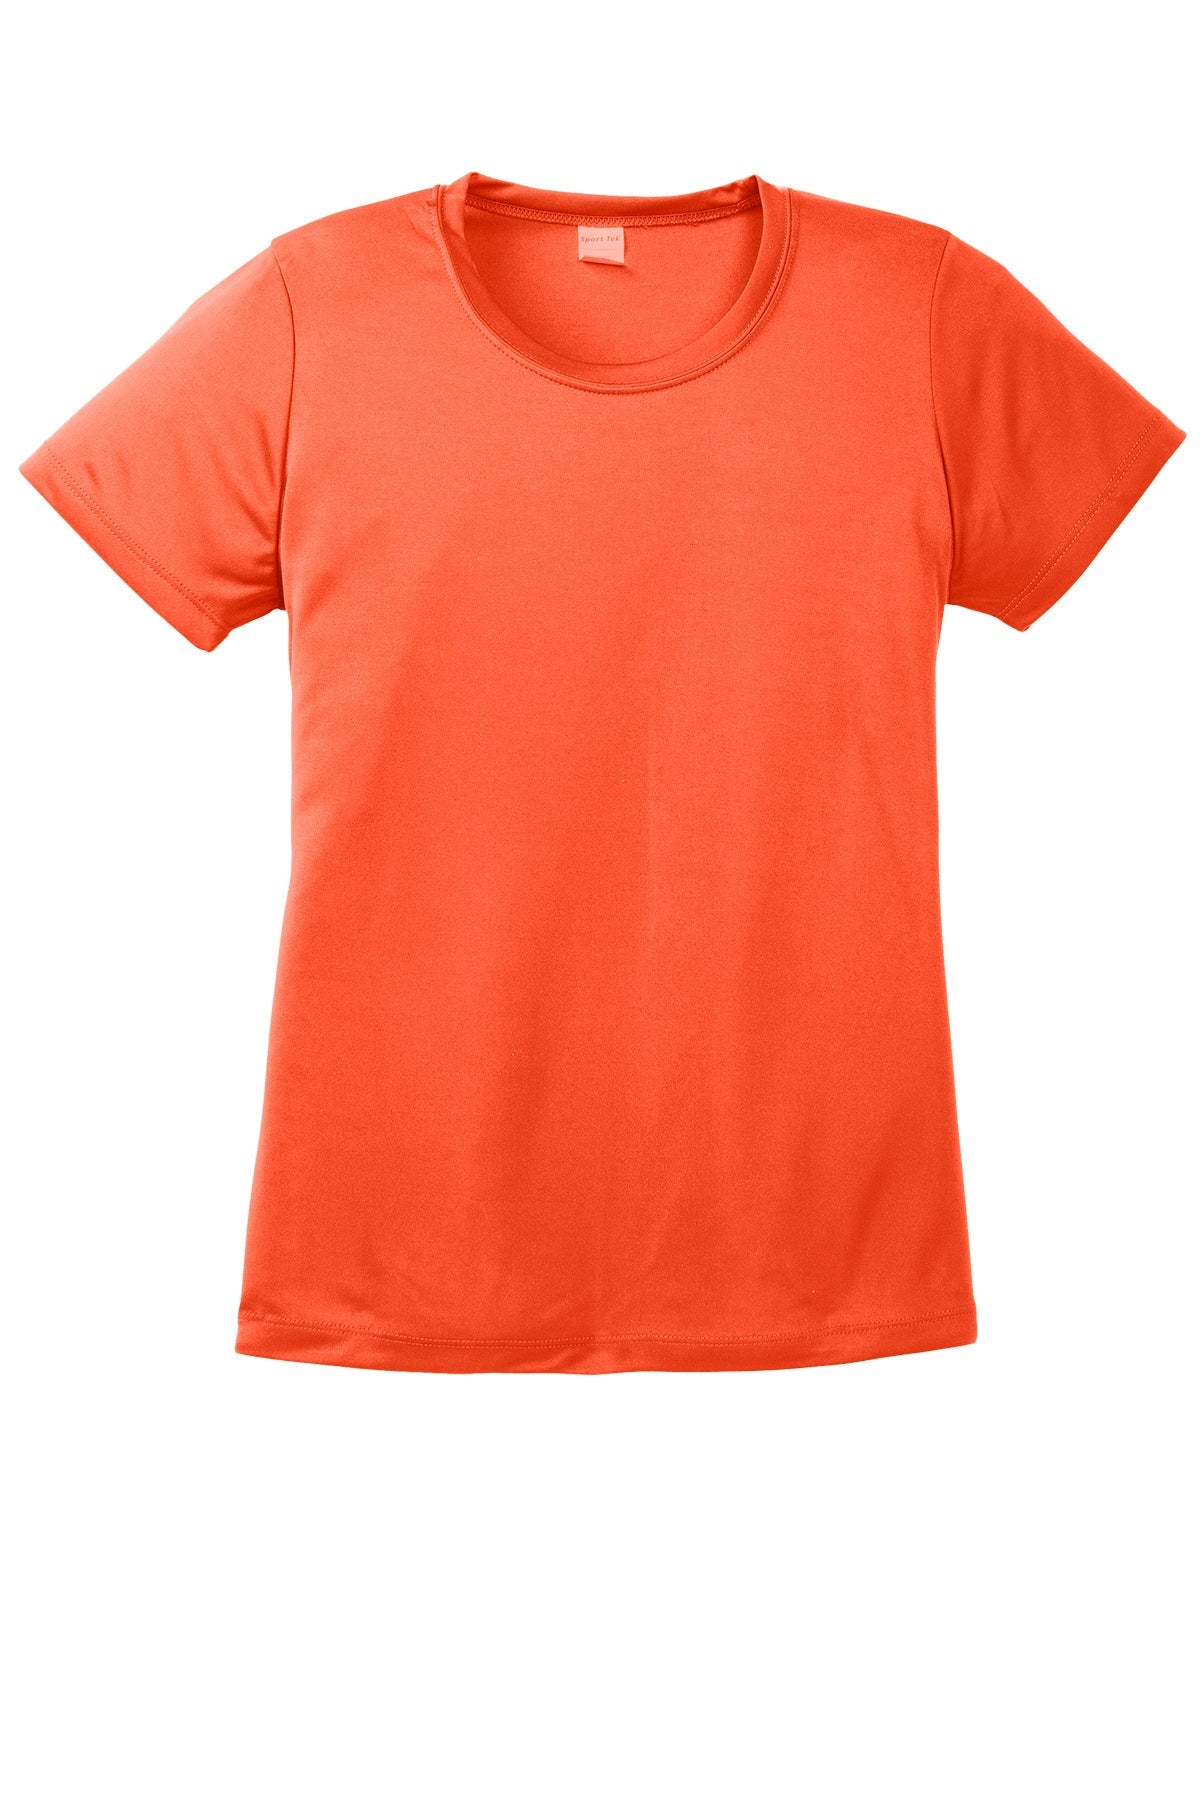 Sport-Tek Lst350 Polyester Ladies T-Shirt Ad Small / Neon Orange